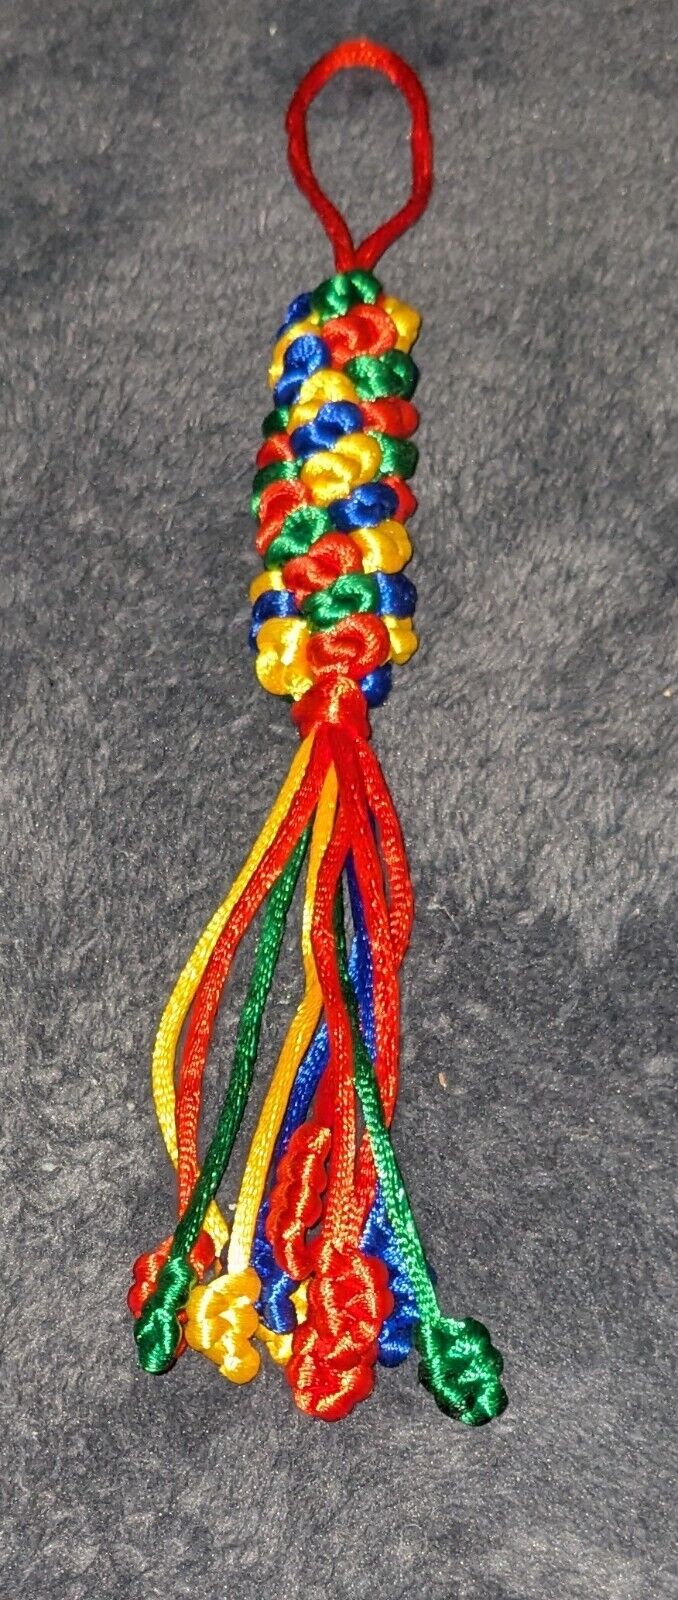 Vajra Knot Pendant Tibetan Buddhist Articles Hand-Woven Ornaments Auspicious Kno